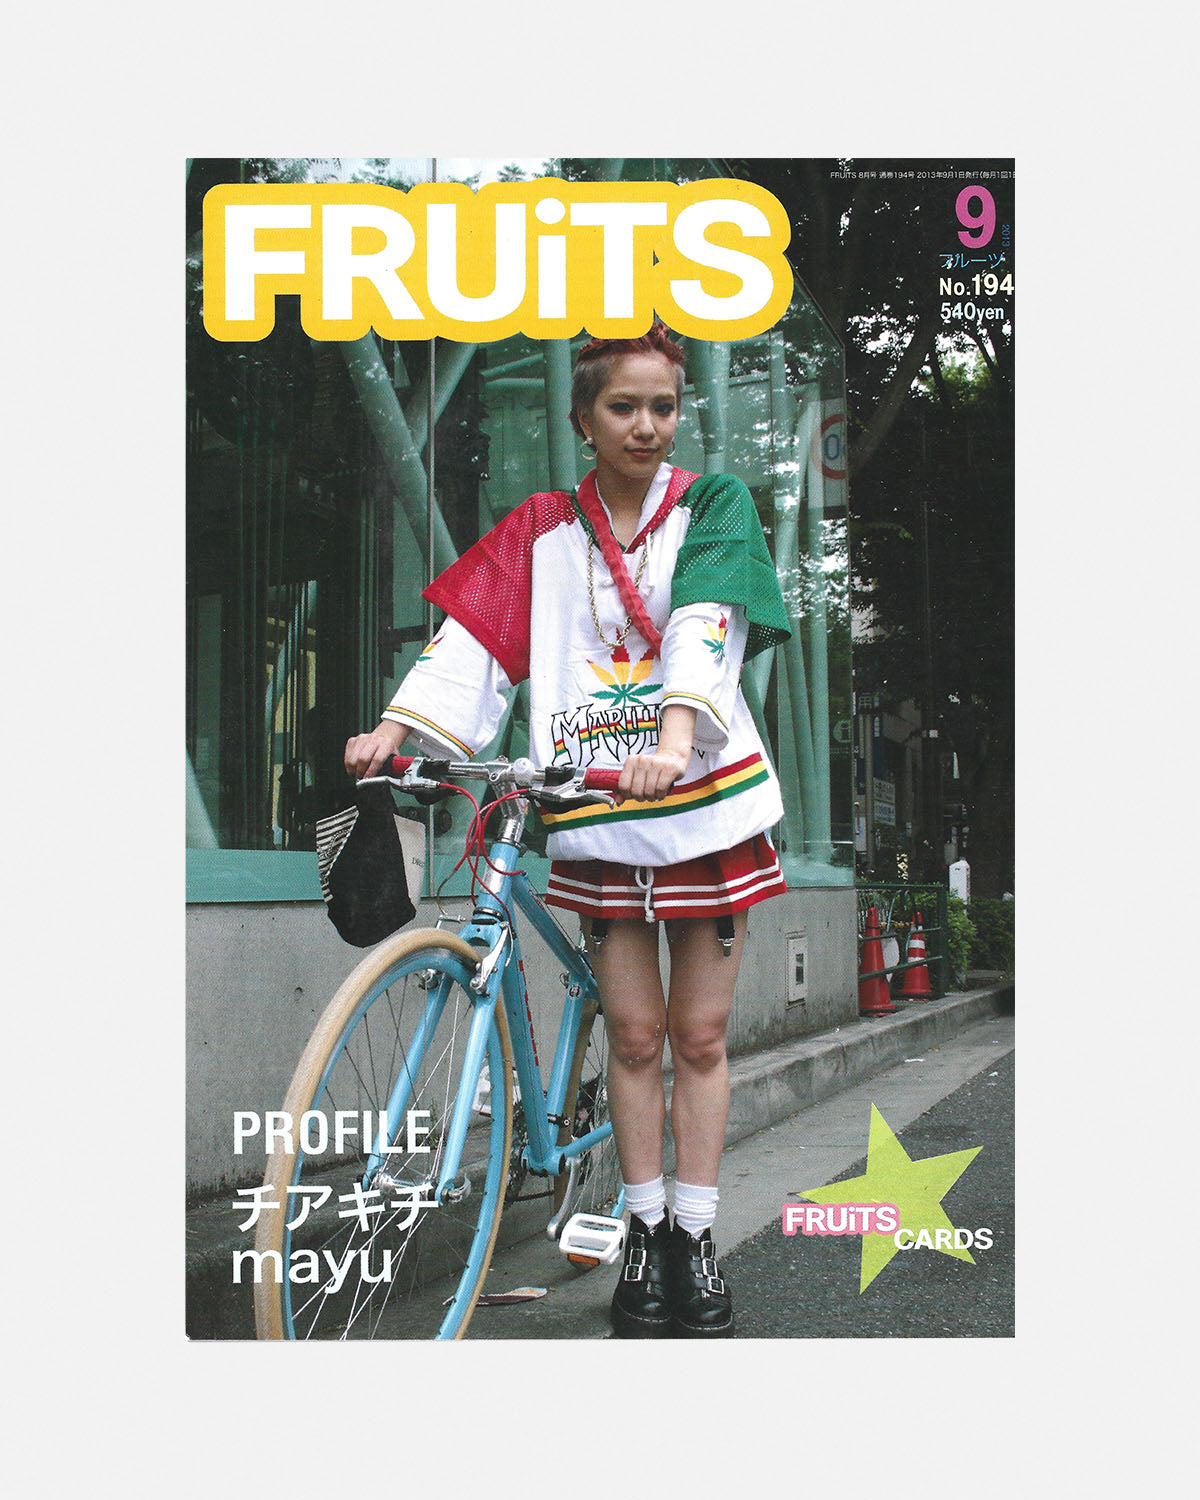 Fruits Magazine September 2013 (#194)